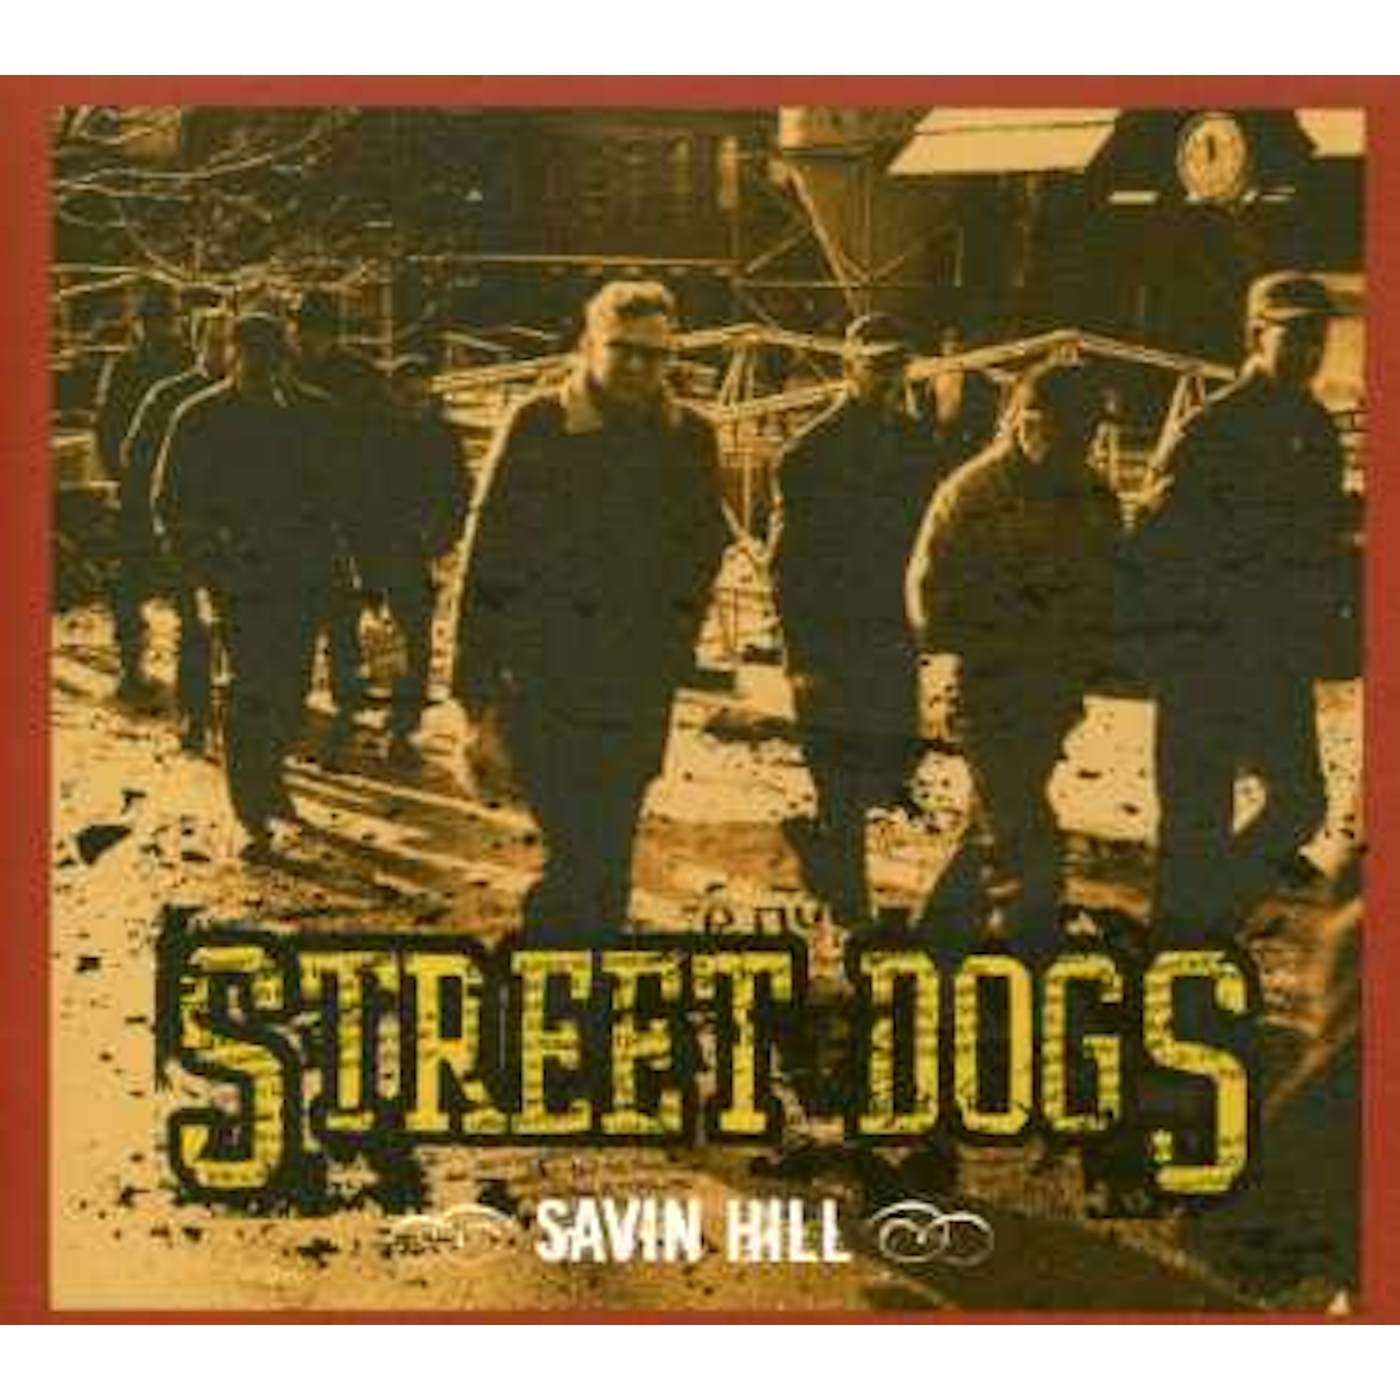 Street Dogs SAVIN HILL CD